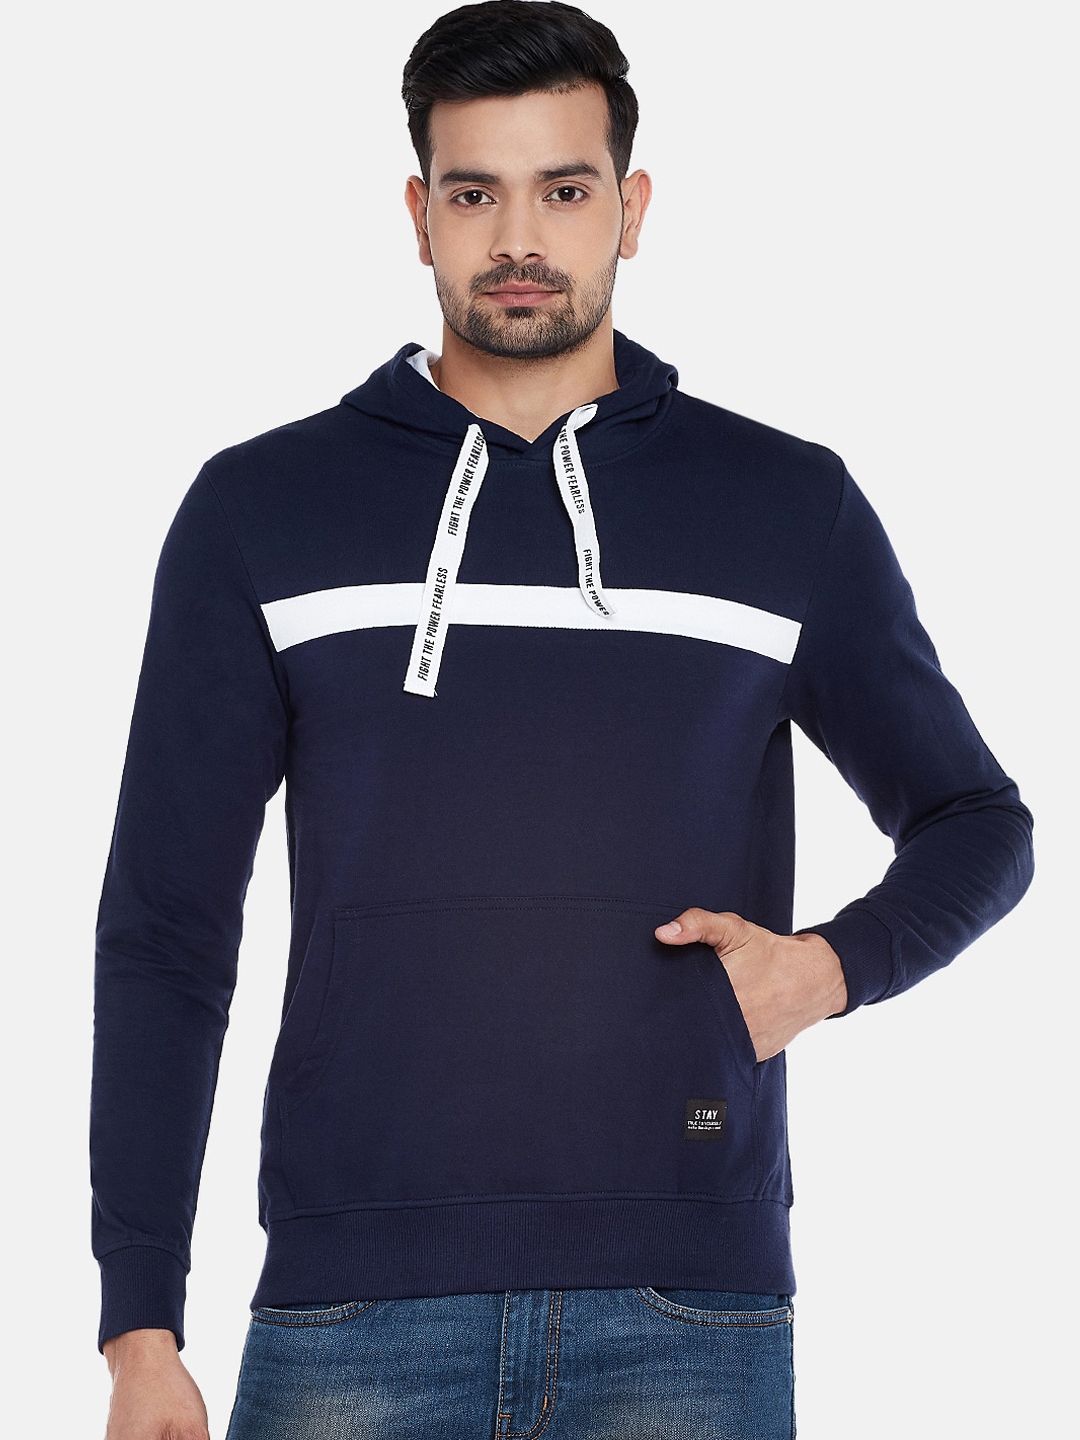 Buy People Men Navy Blue & White Striped Hooded Sweatshirt ...